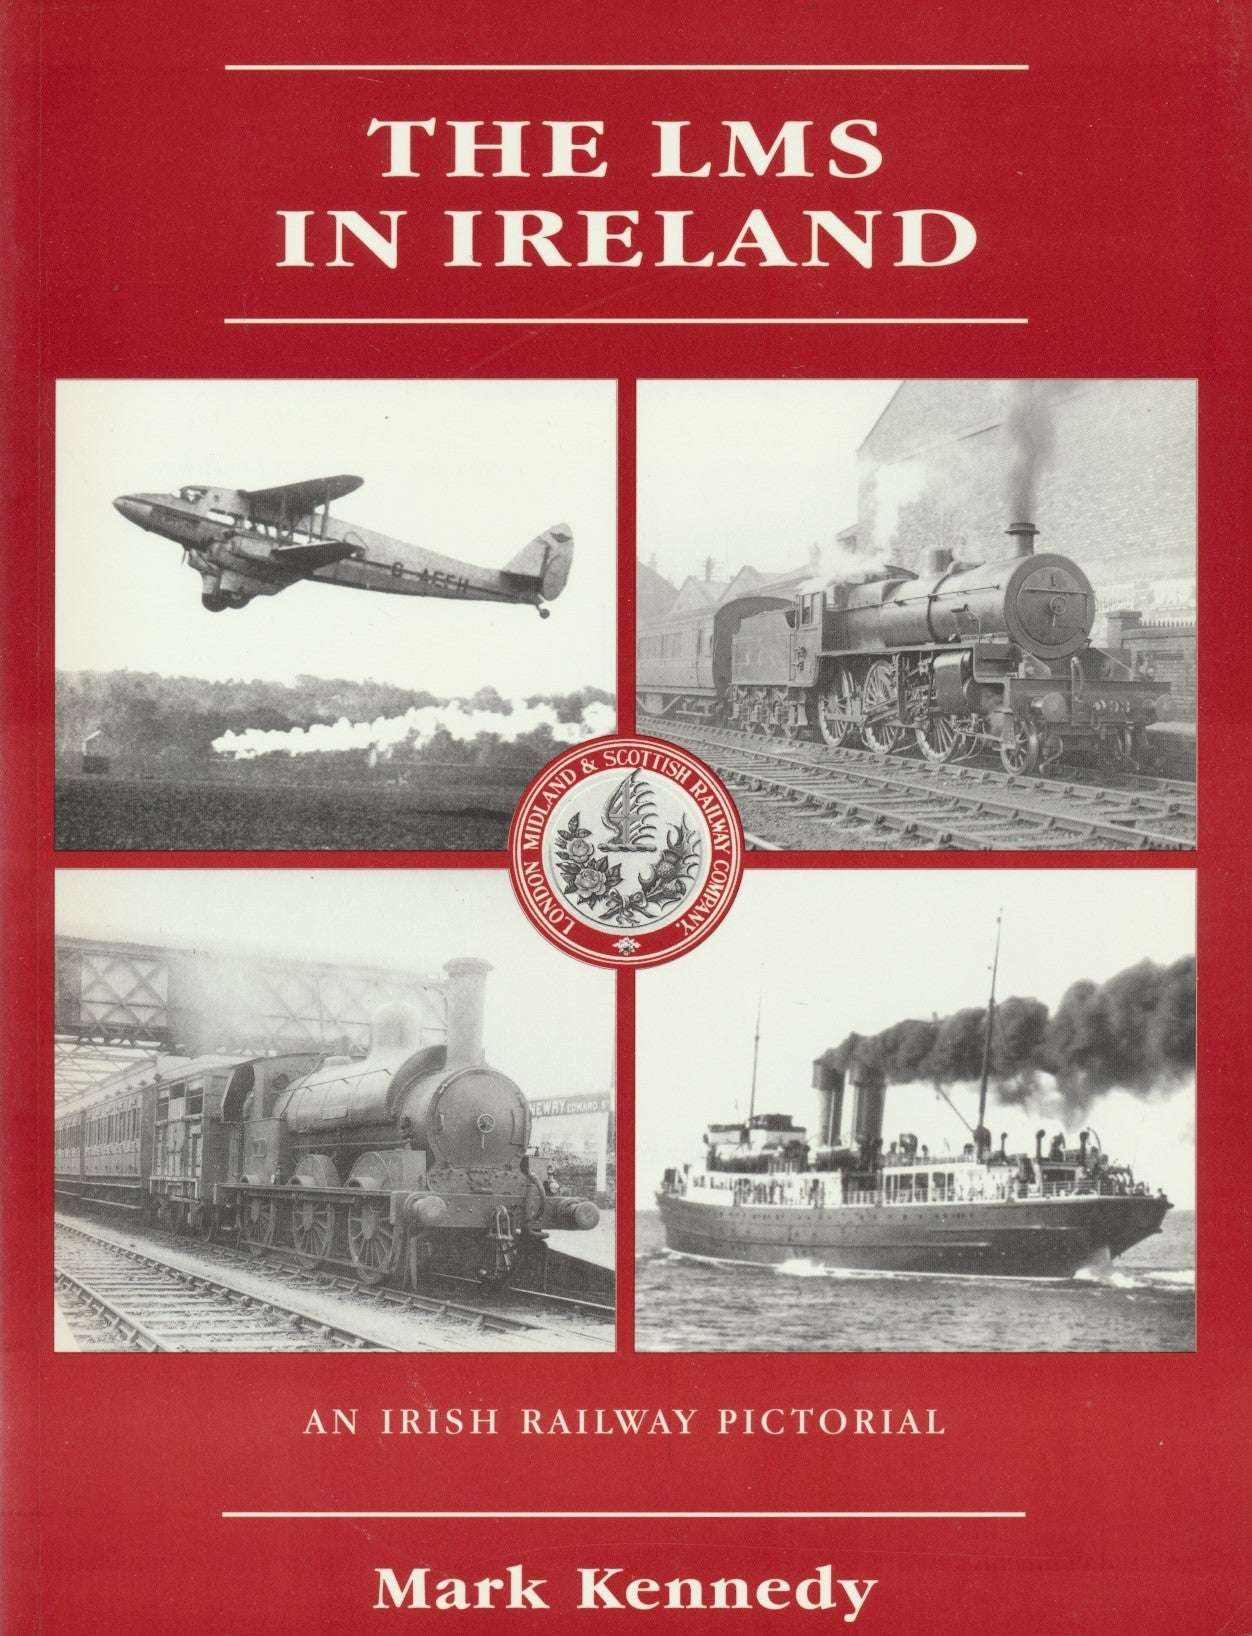 The LMS in Ireland - An Irish Railway Pictorial